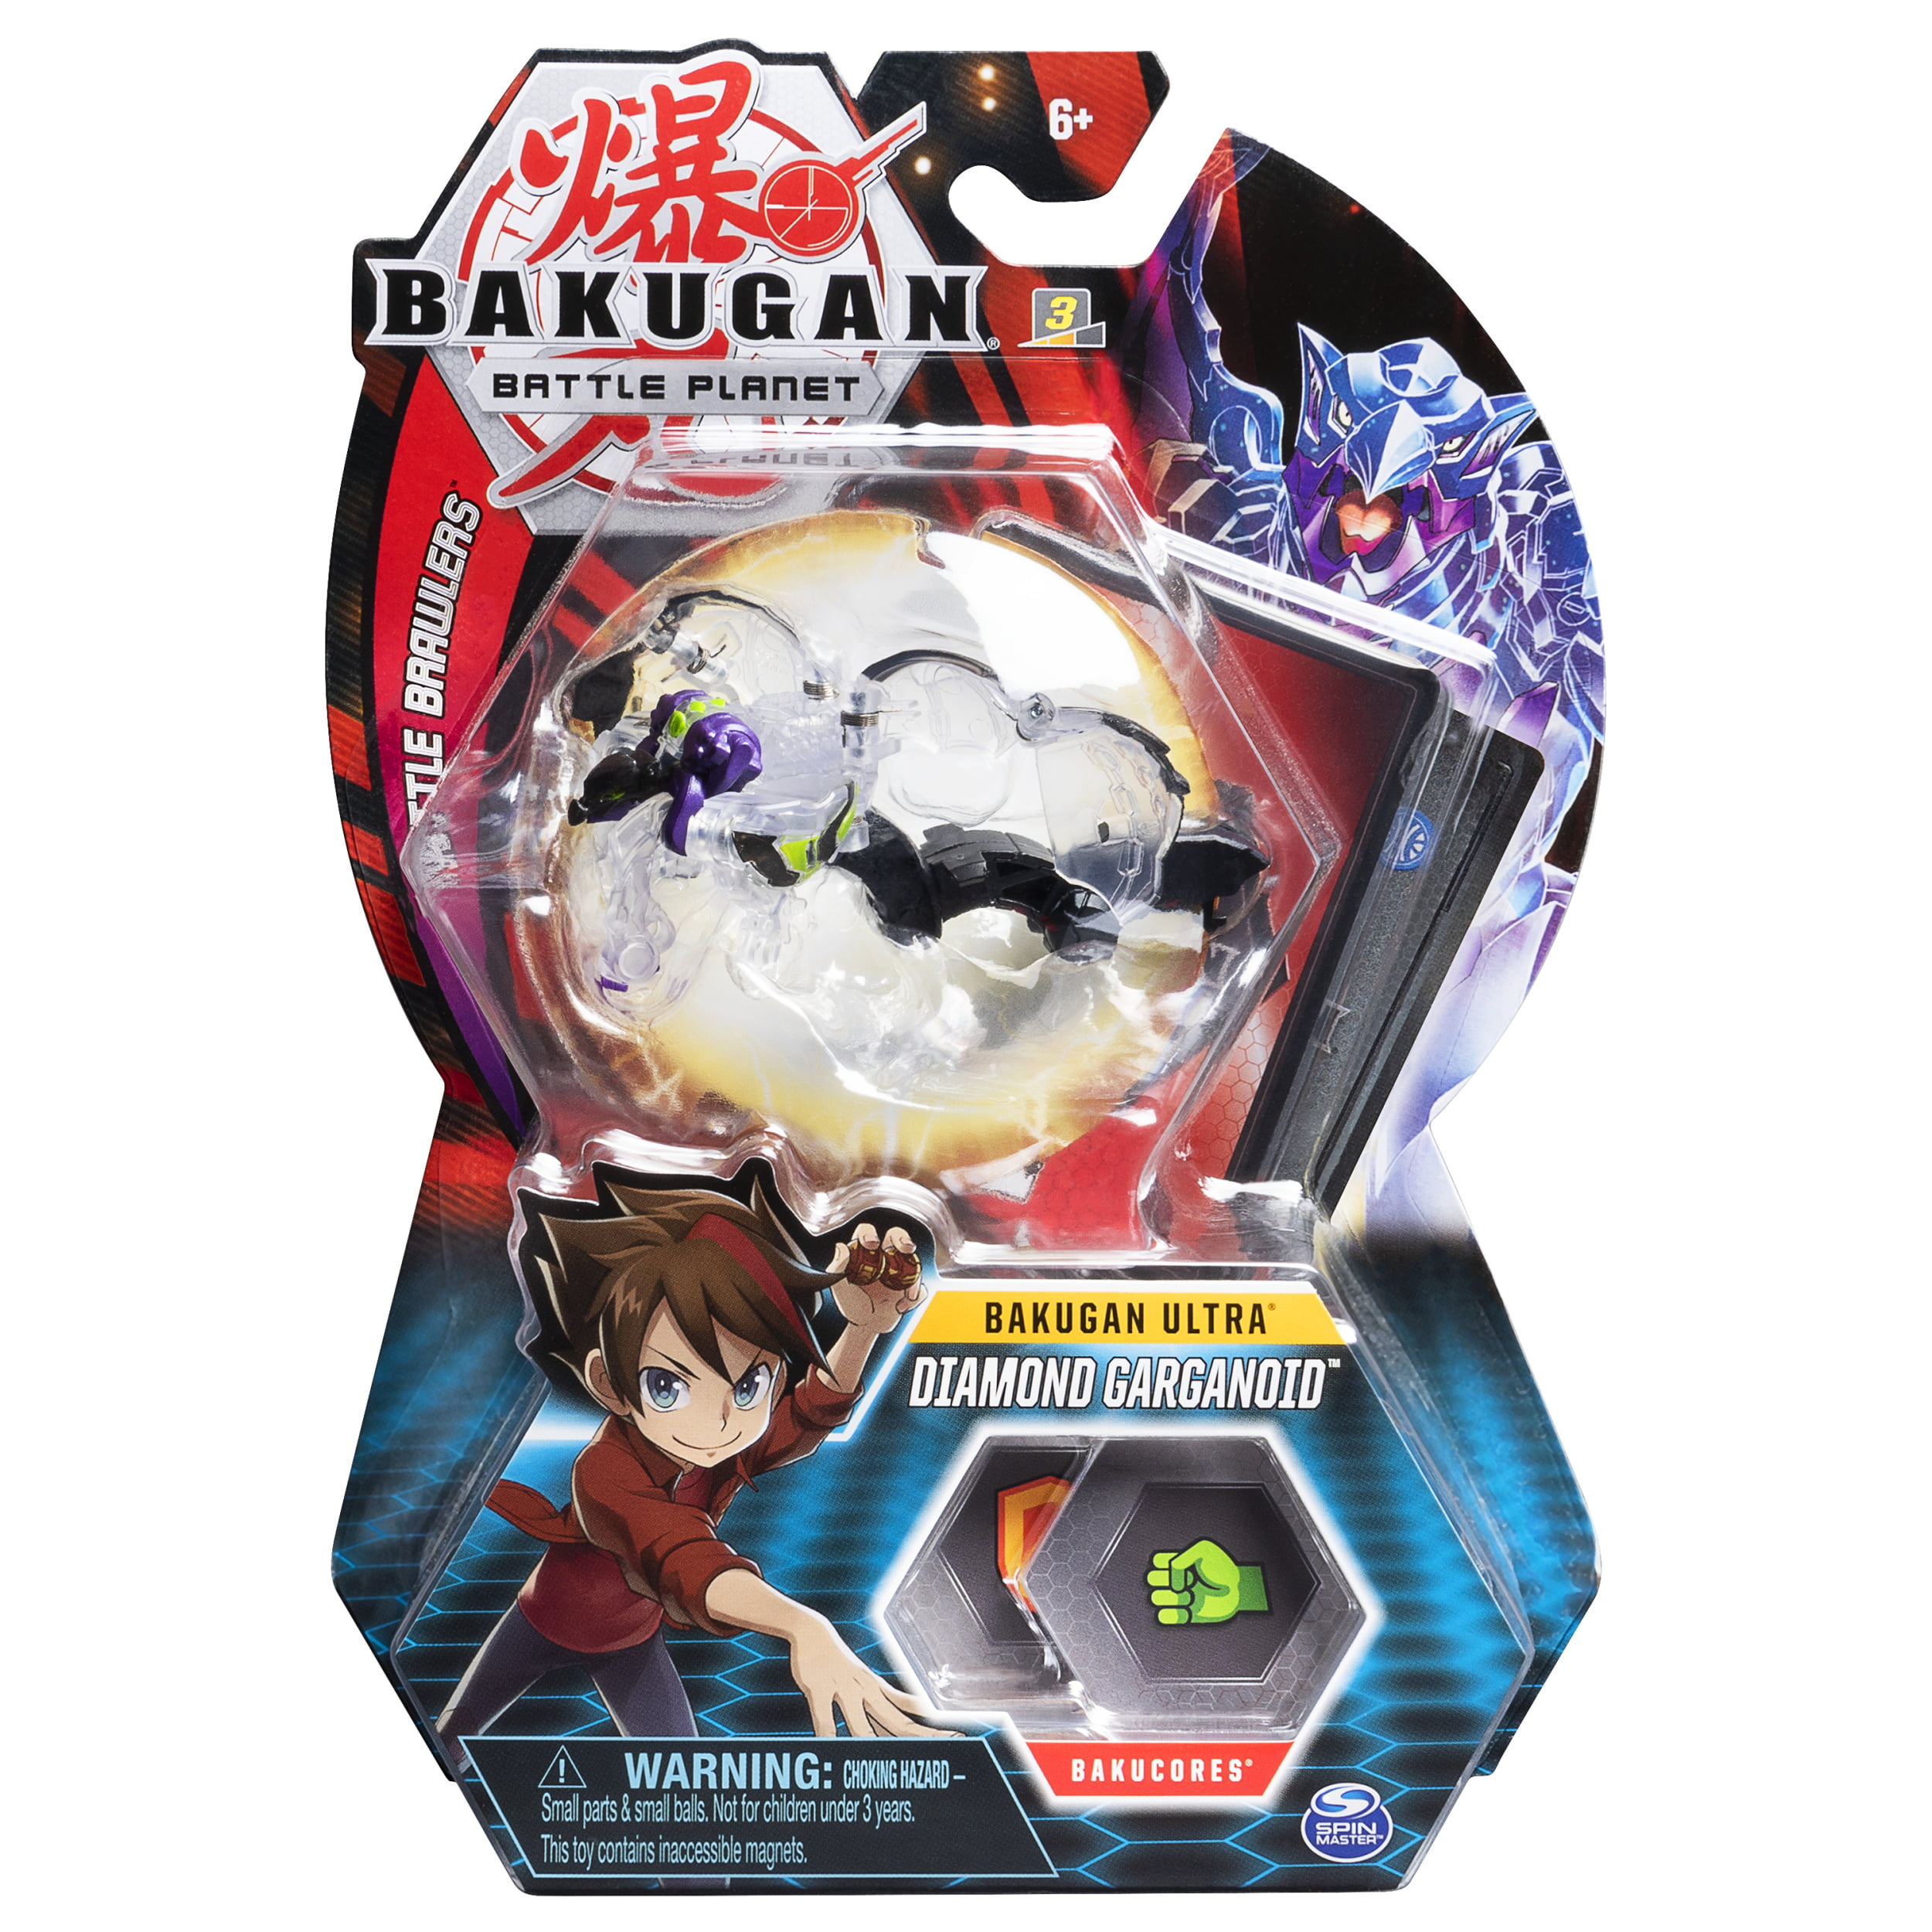 DIAMOND CLOPTOR Bakugan Battle Planet brings Bakugan cards and cores RARE